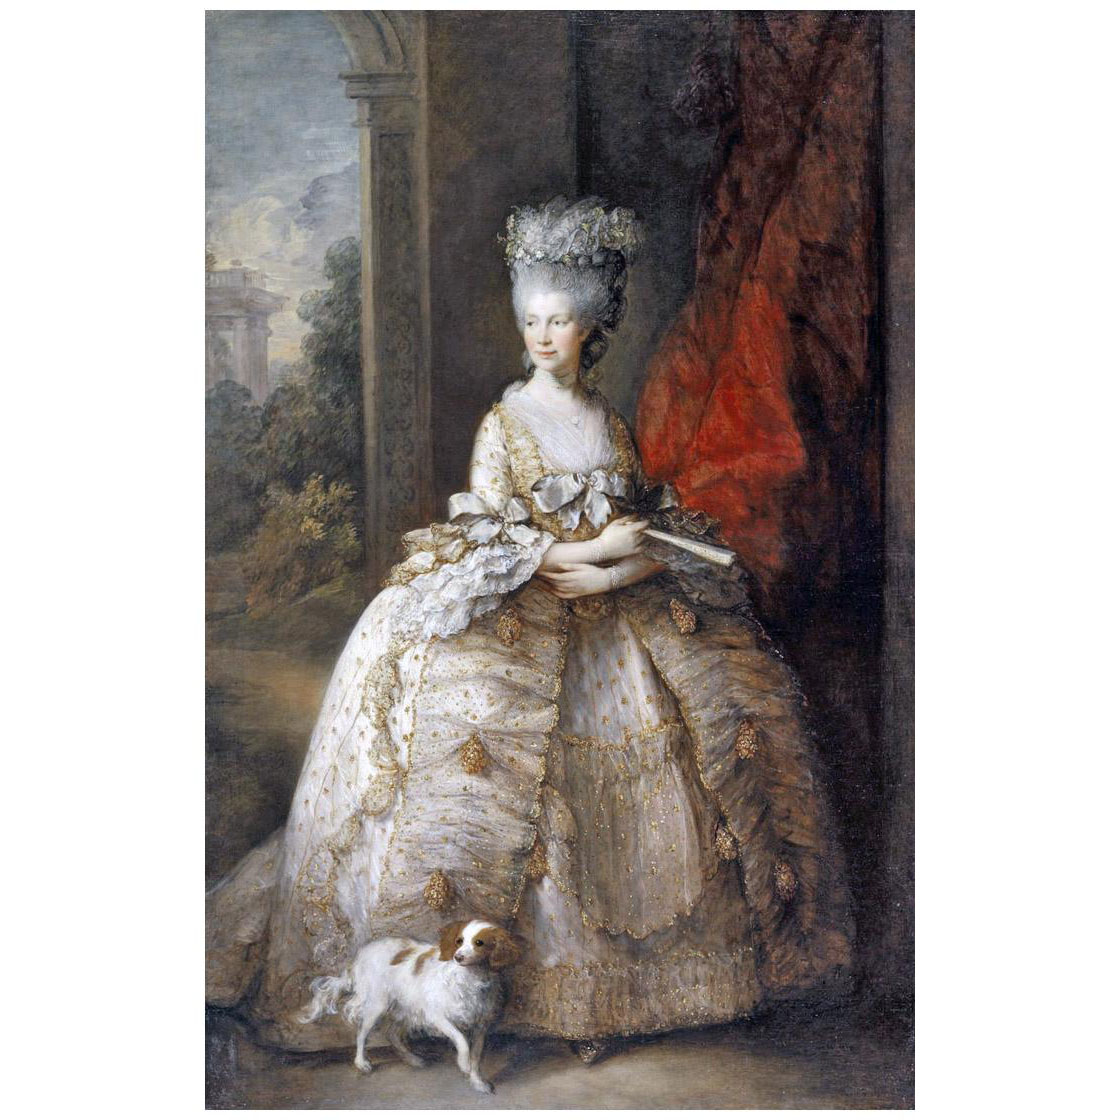 Thomas Gainsborough. Queen Charlotte. 1781. Royal collection London